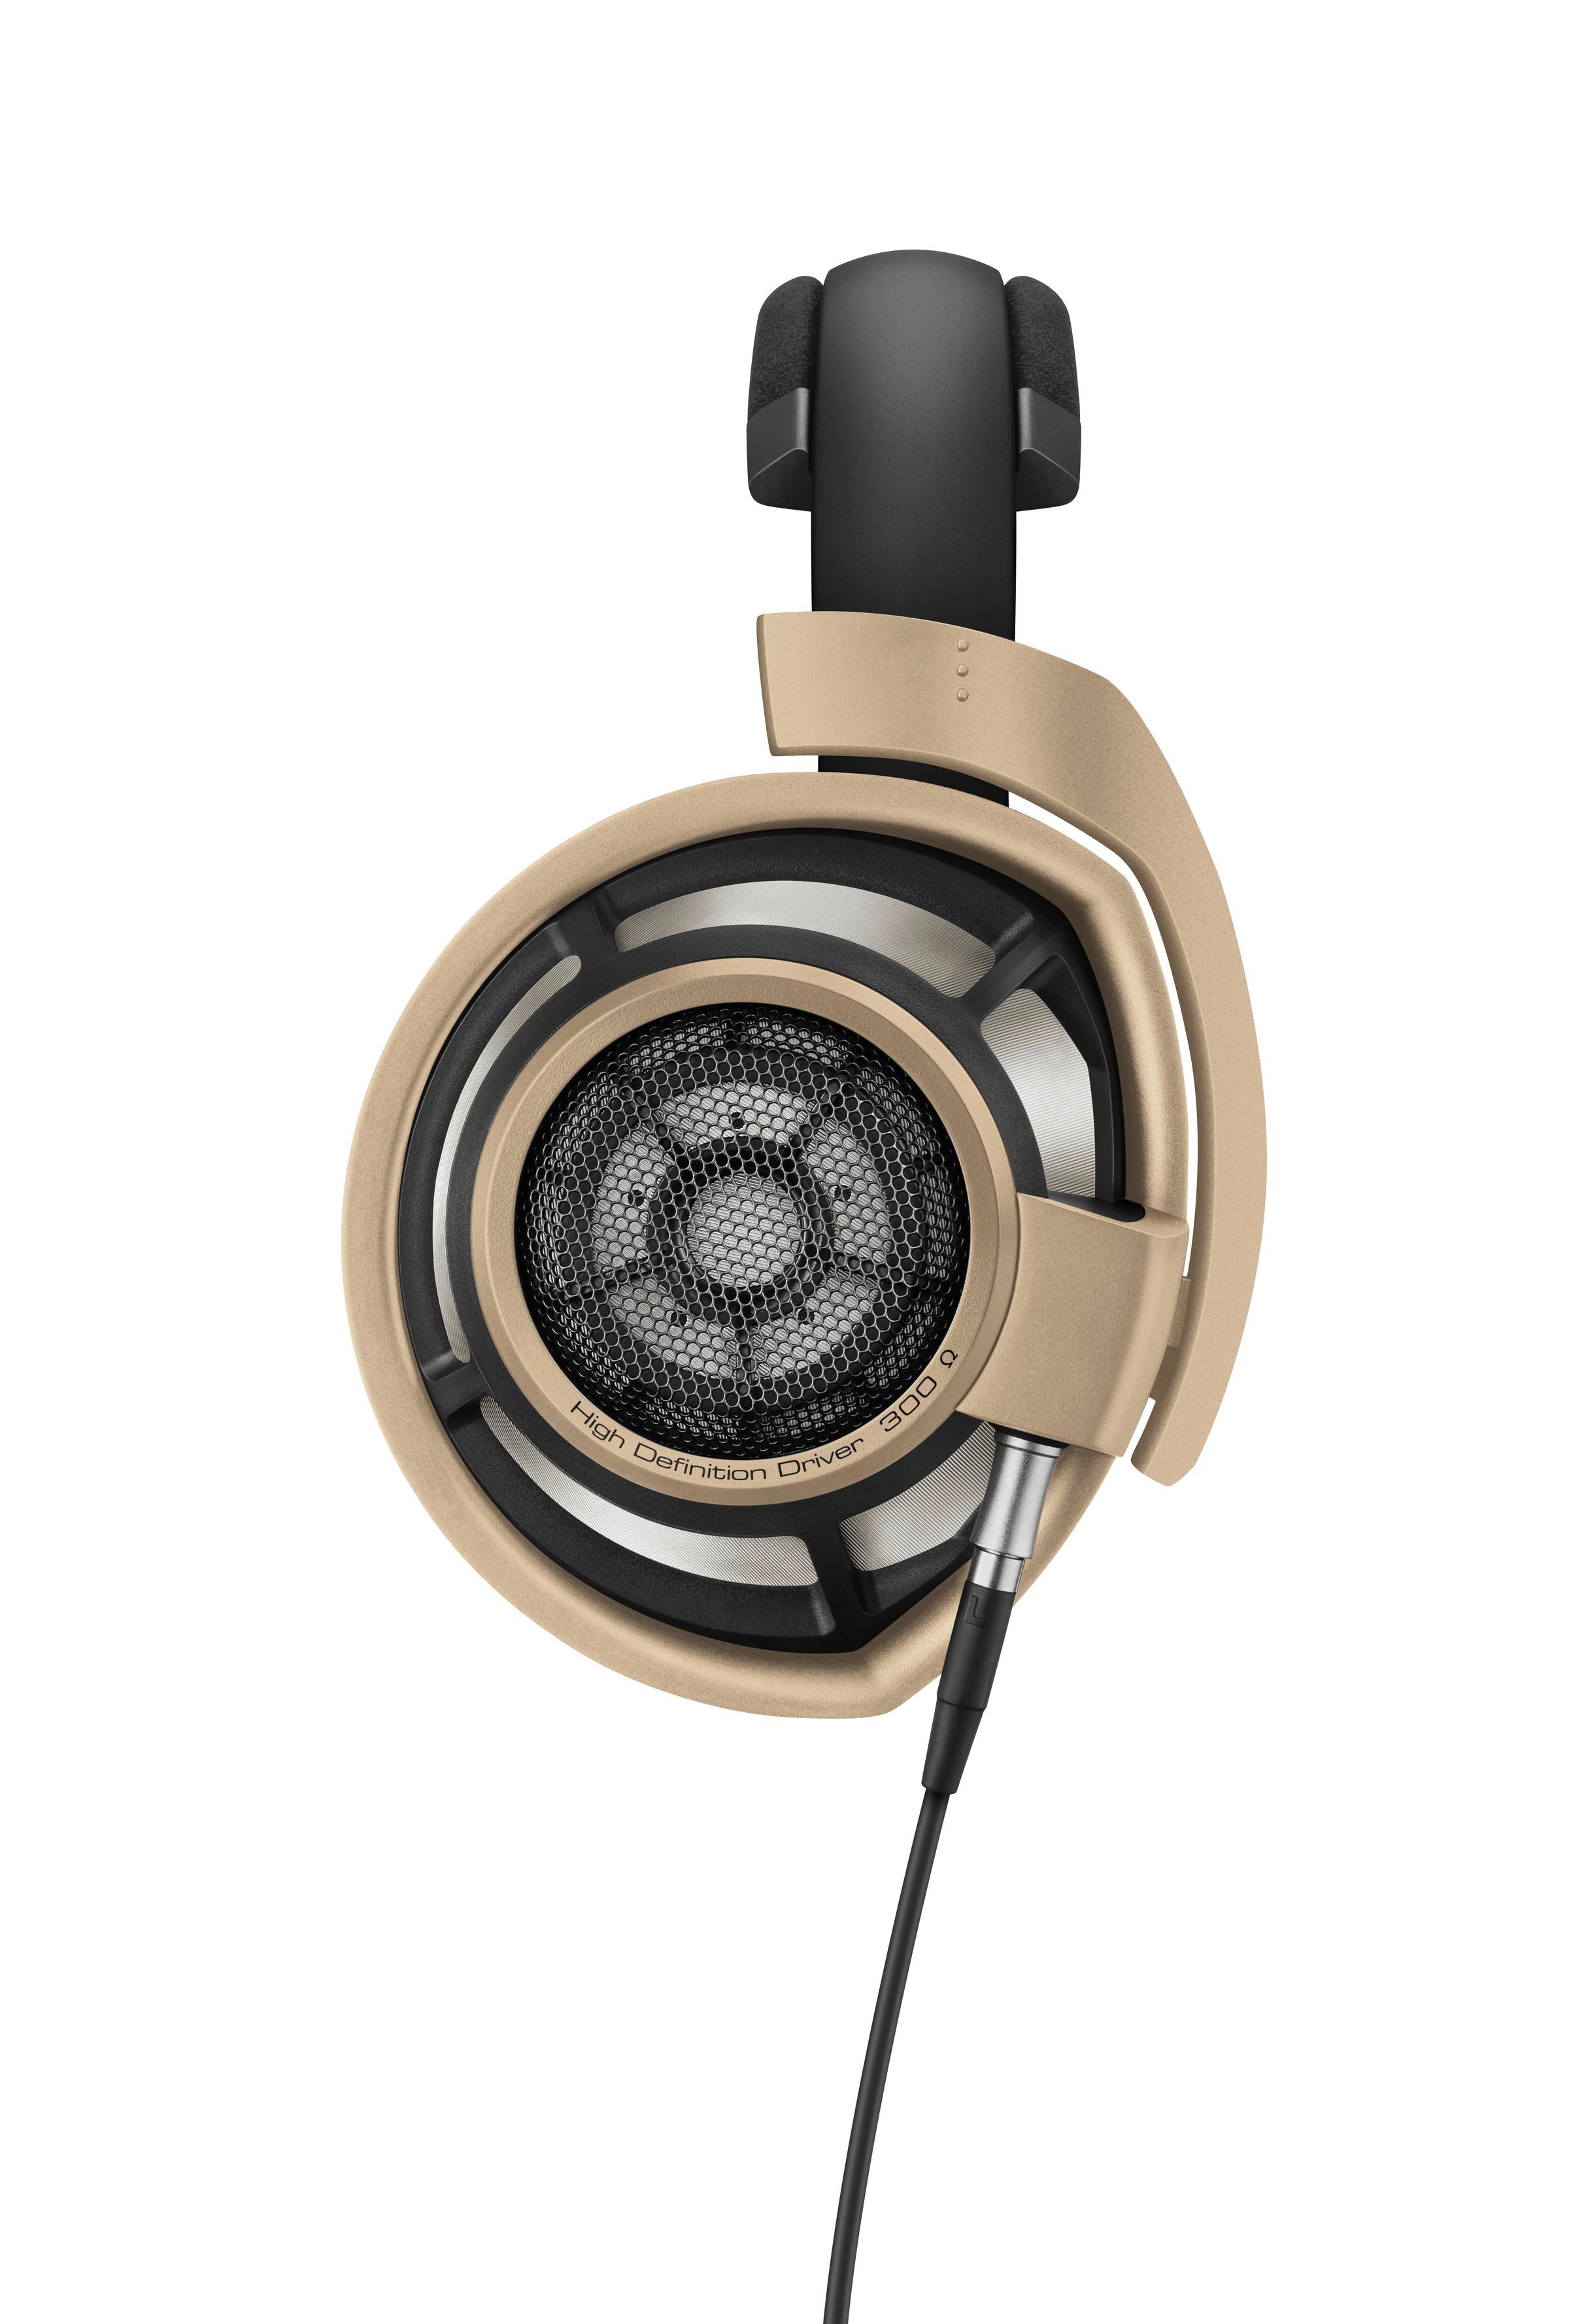 Sennheiser HD800s Special Edition | headphones.com